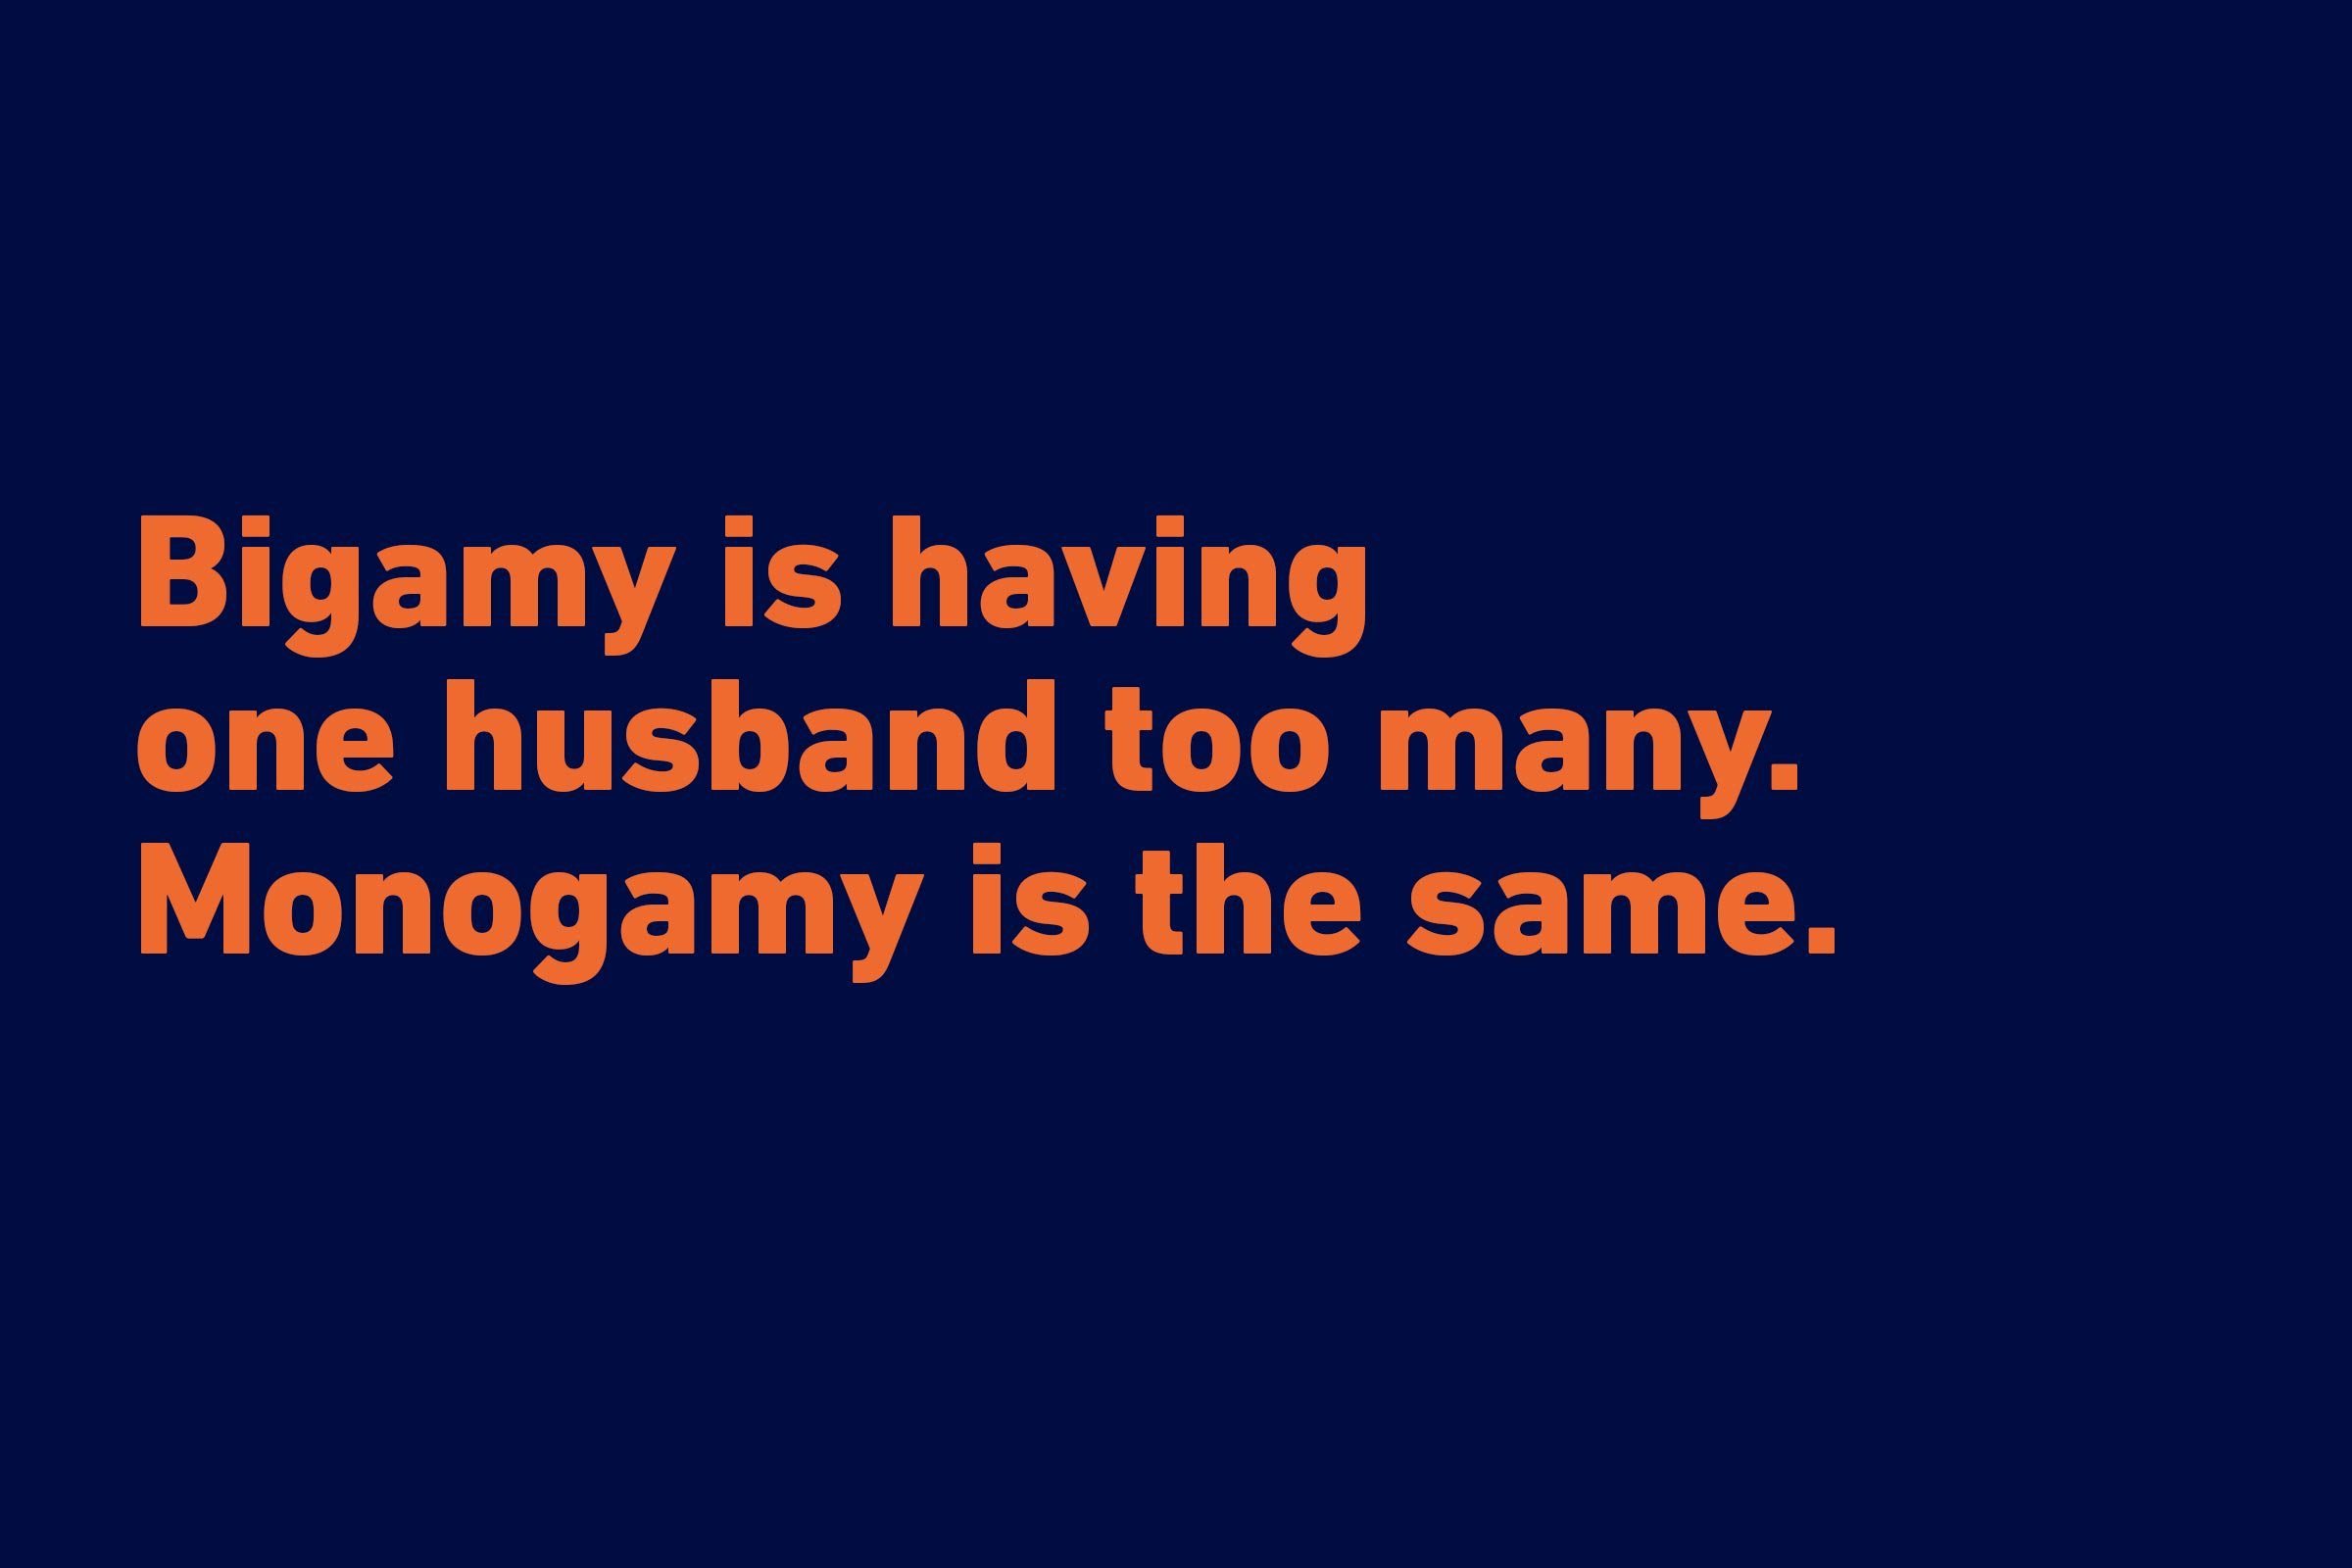 Wedding jokes about monogamy